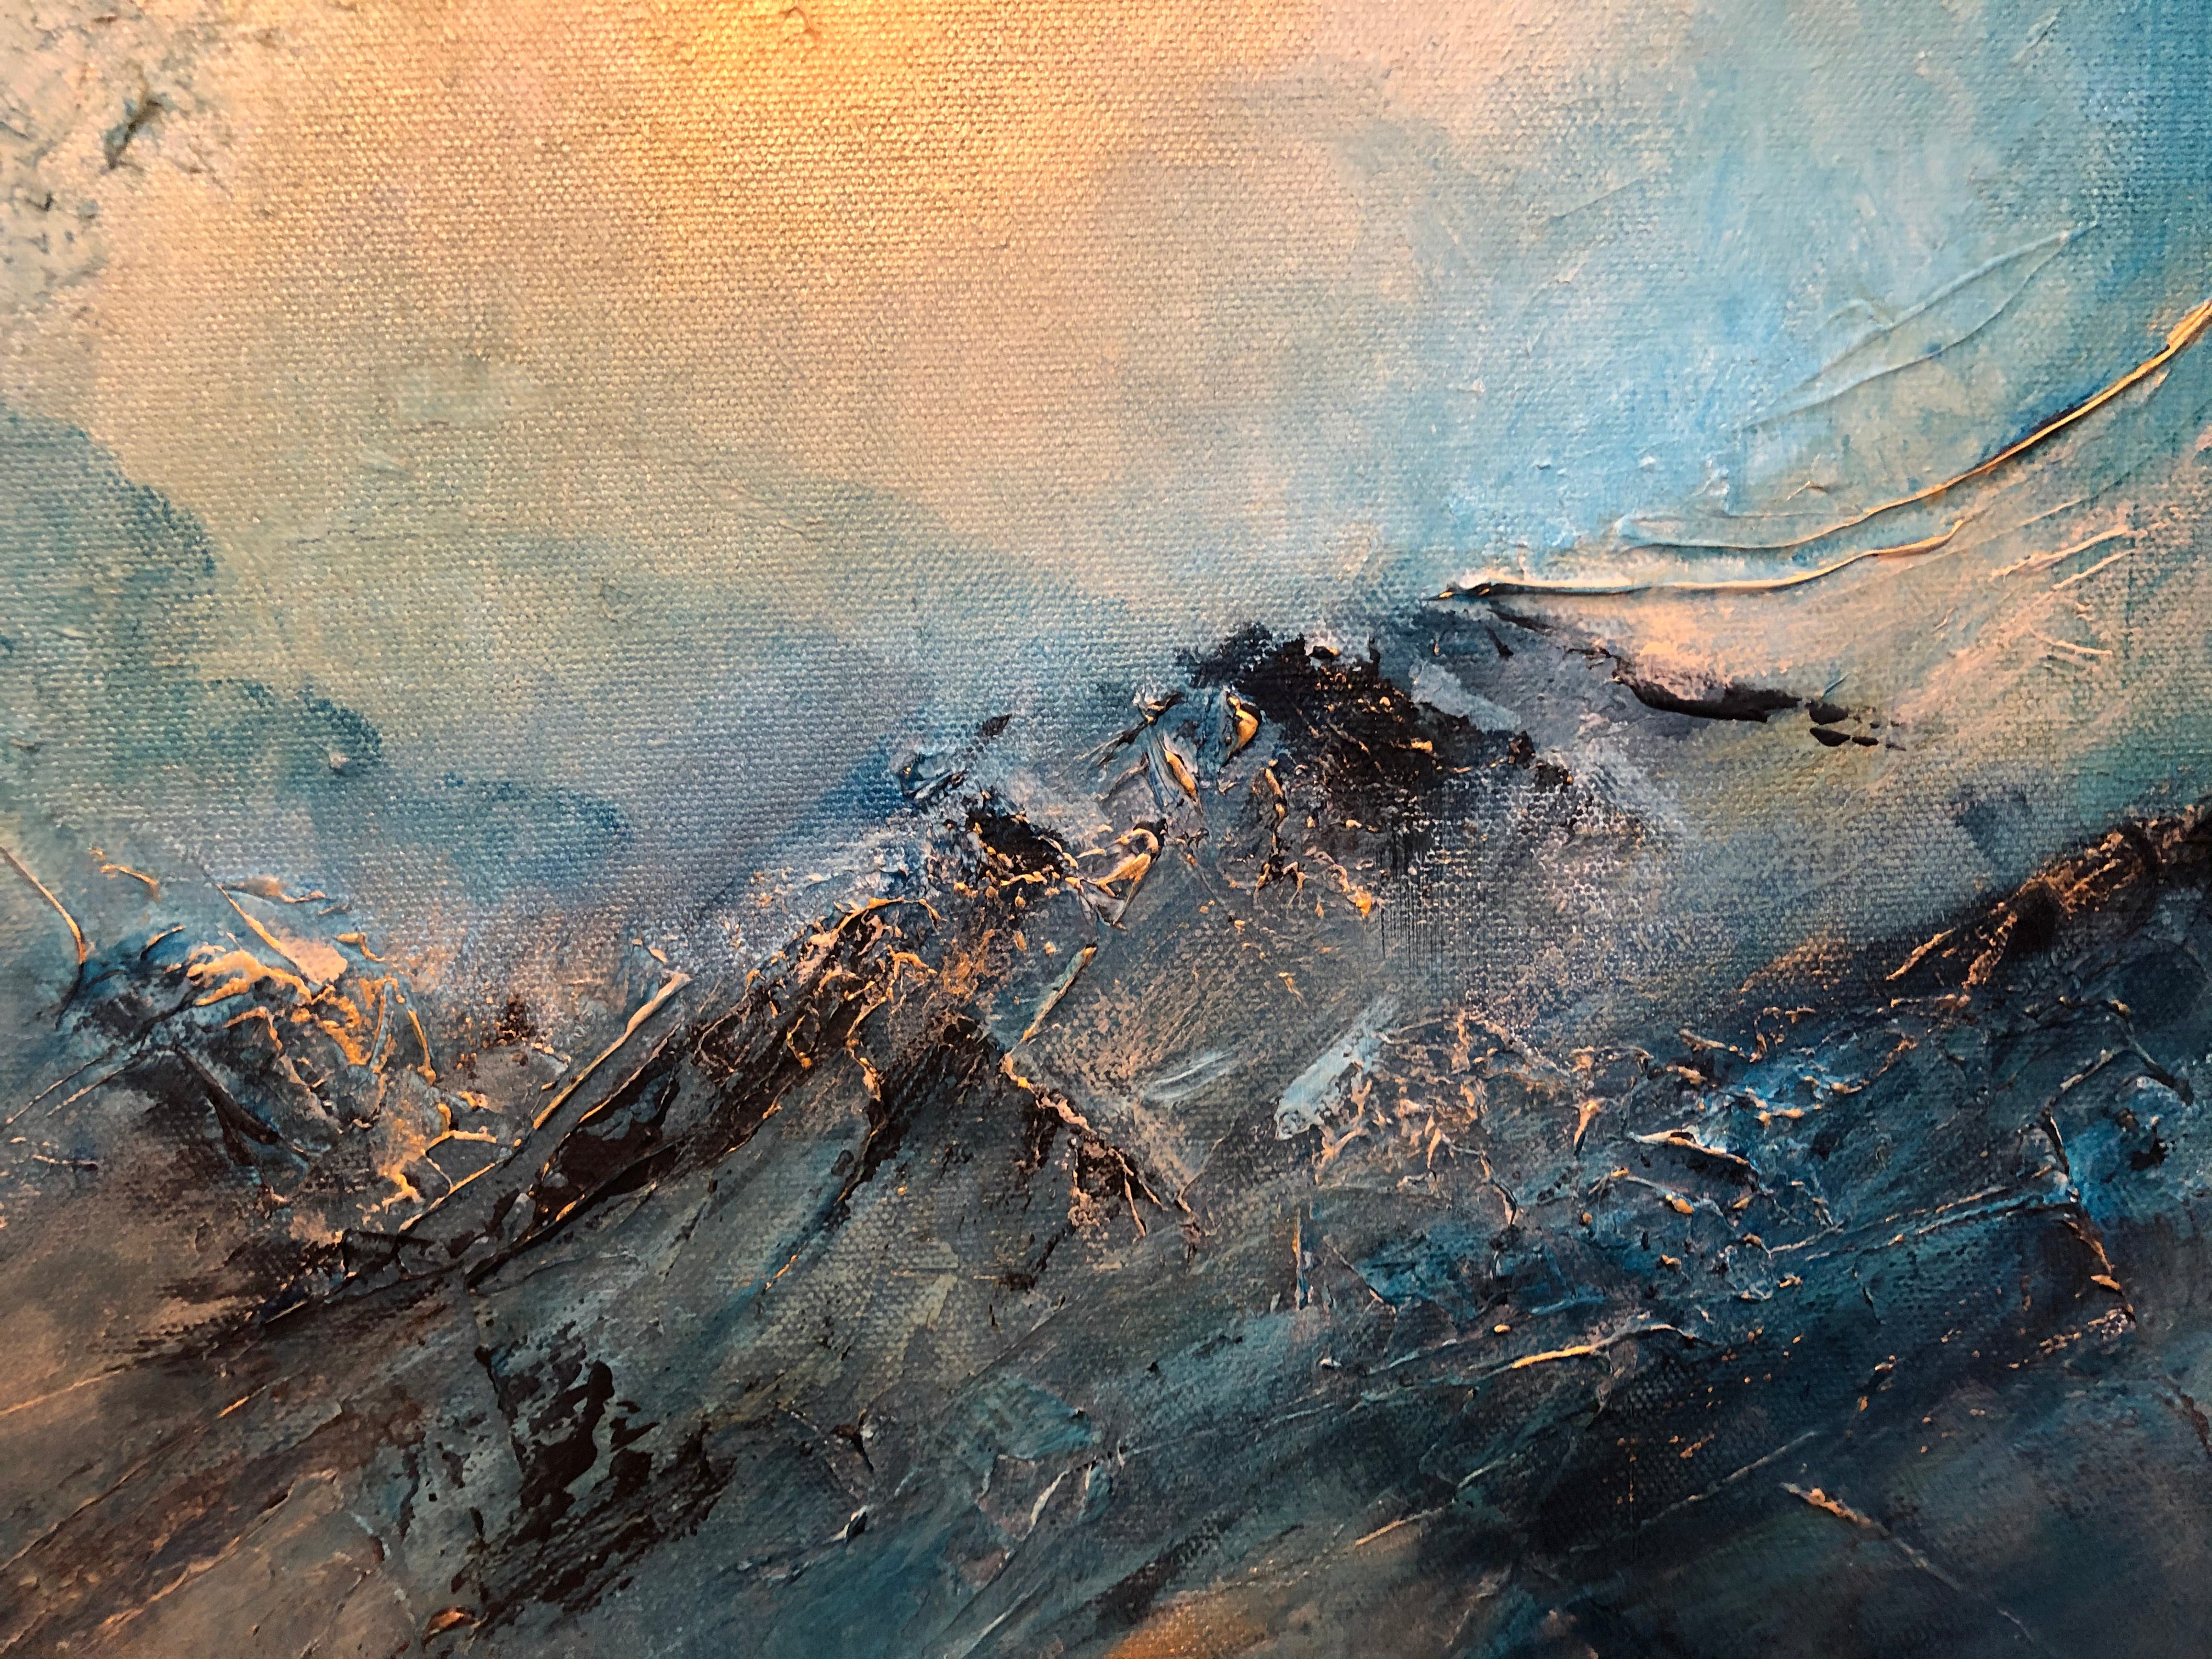 Twilight Mountains -  Semi-Abstract Acrylic Painting